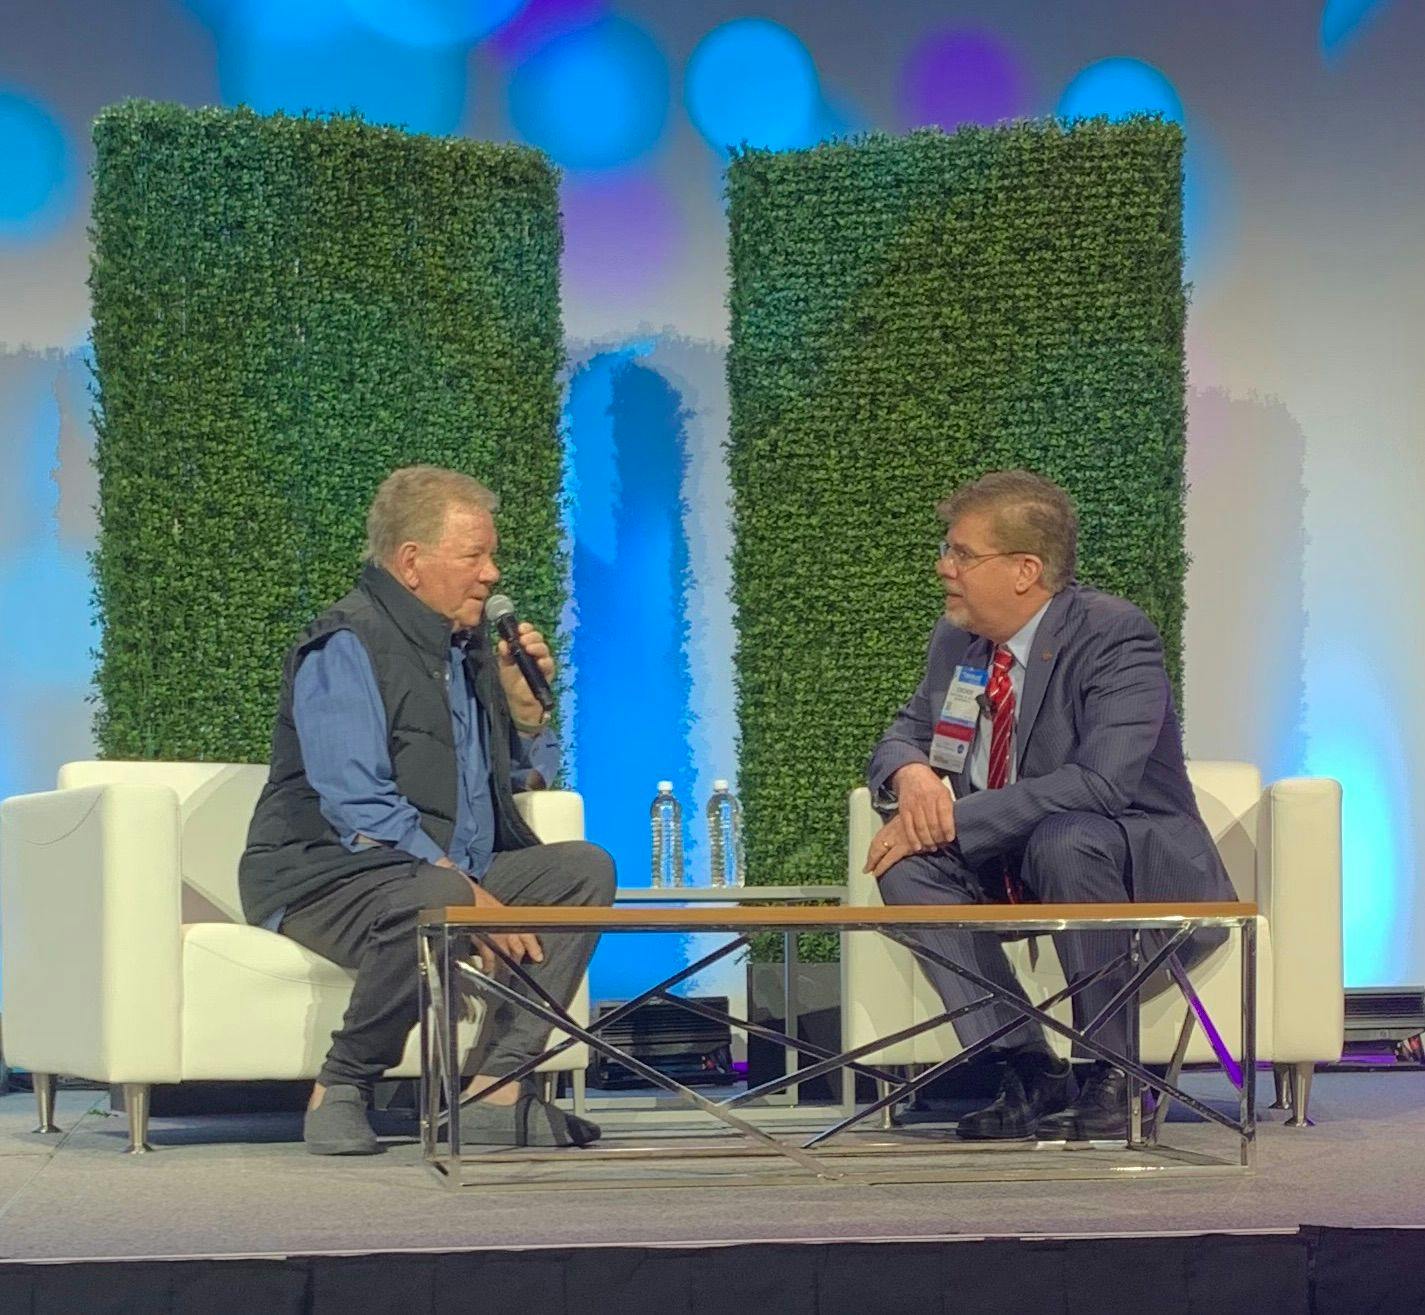 
"Star Trek" star William Shatner (left) speaks with Terrence A. Cronin Jr., president of the American Academy of Dermatology.